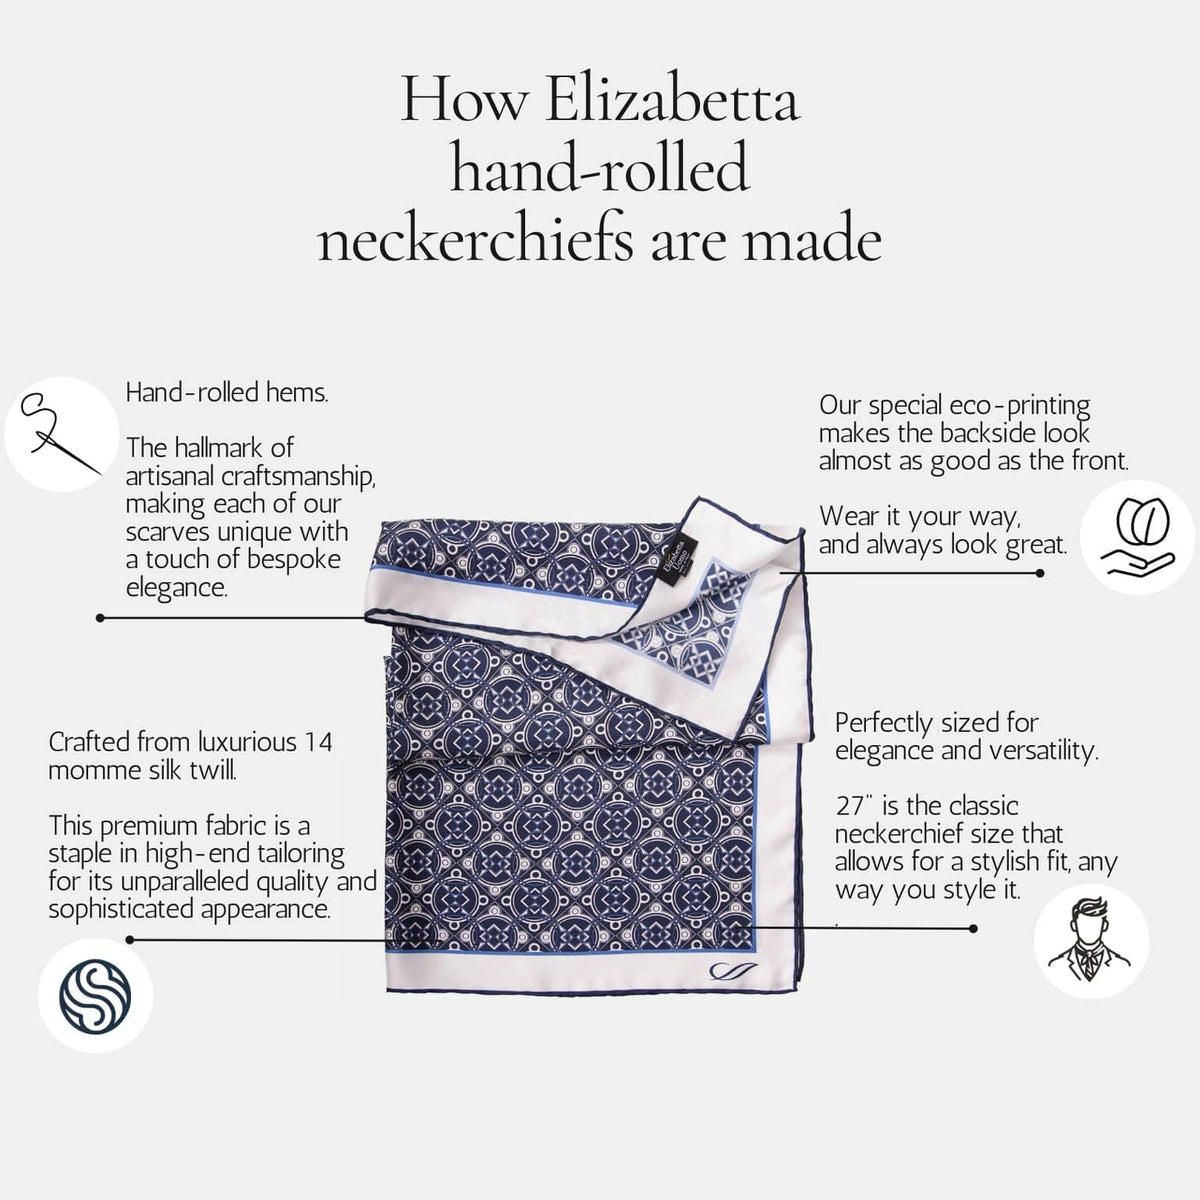 How Elizabetta Italian silk neckerchiefs are made